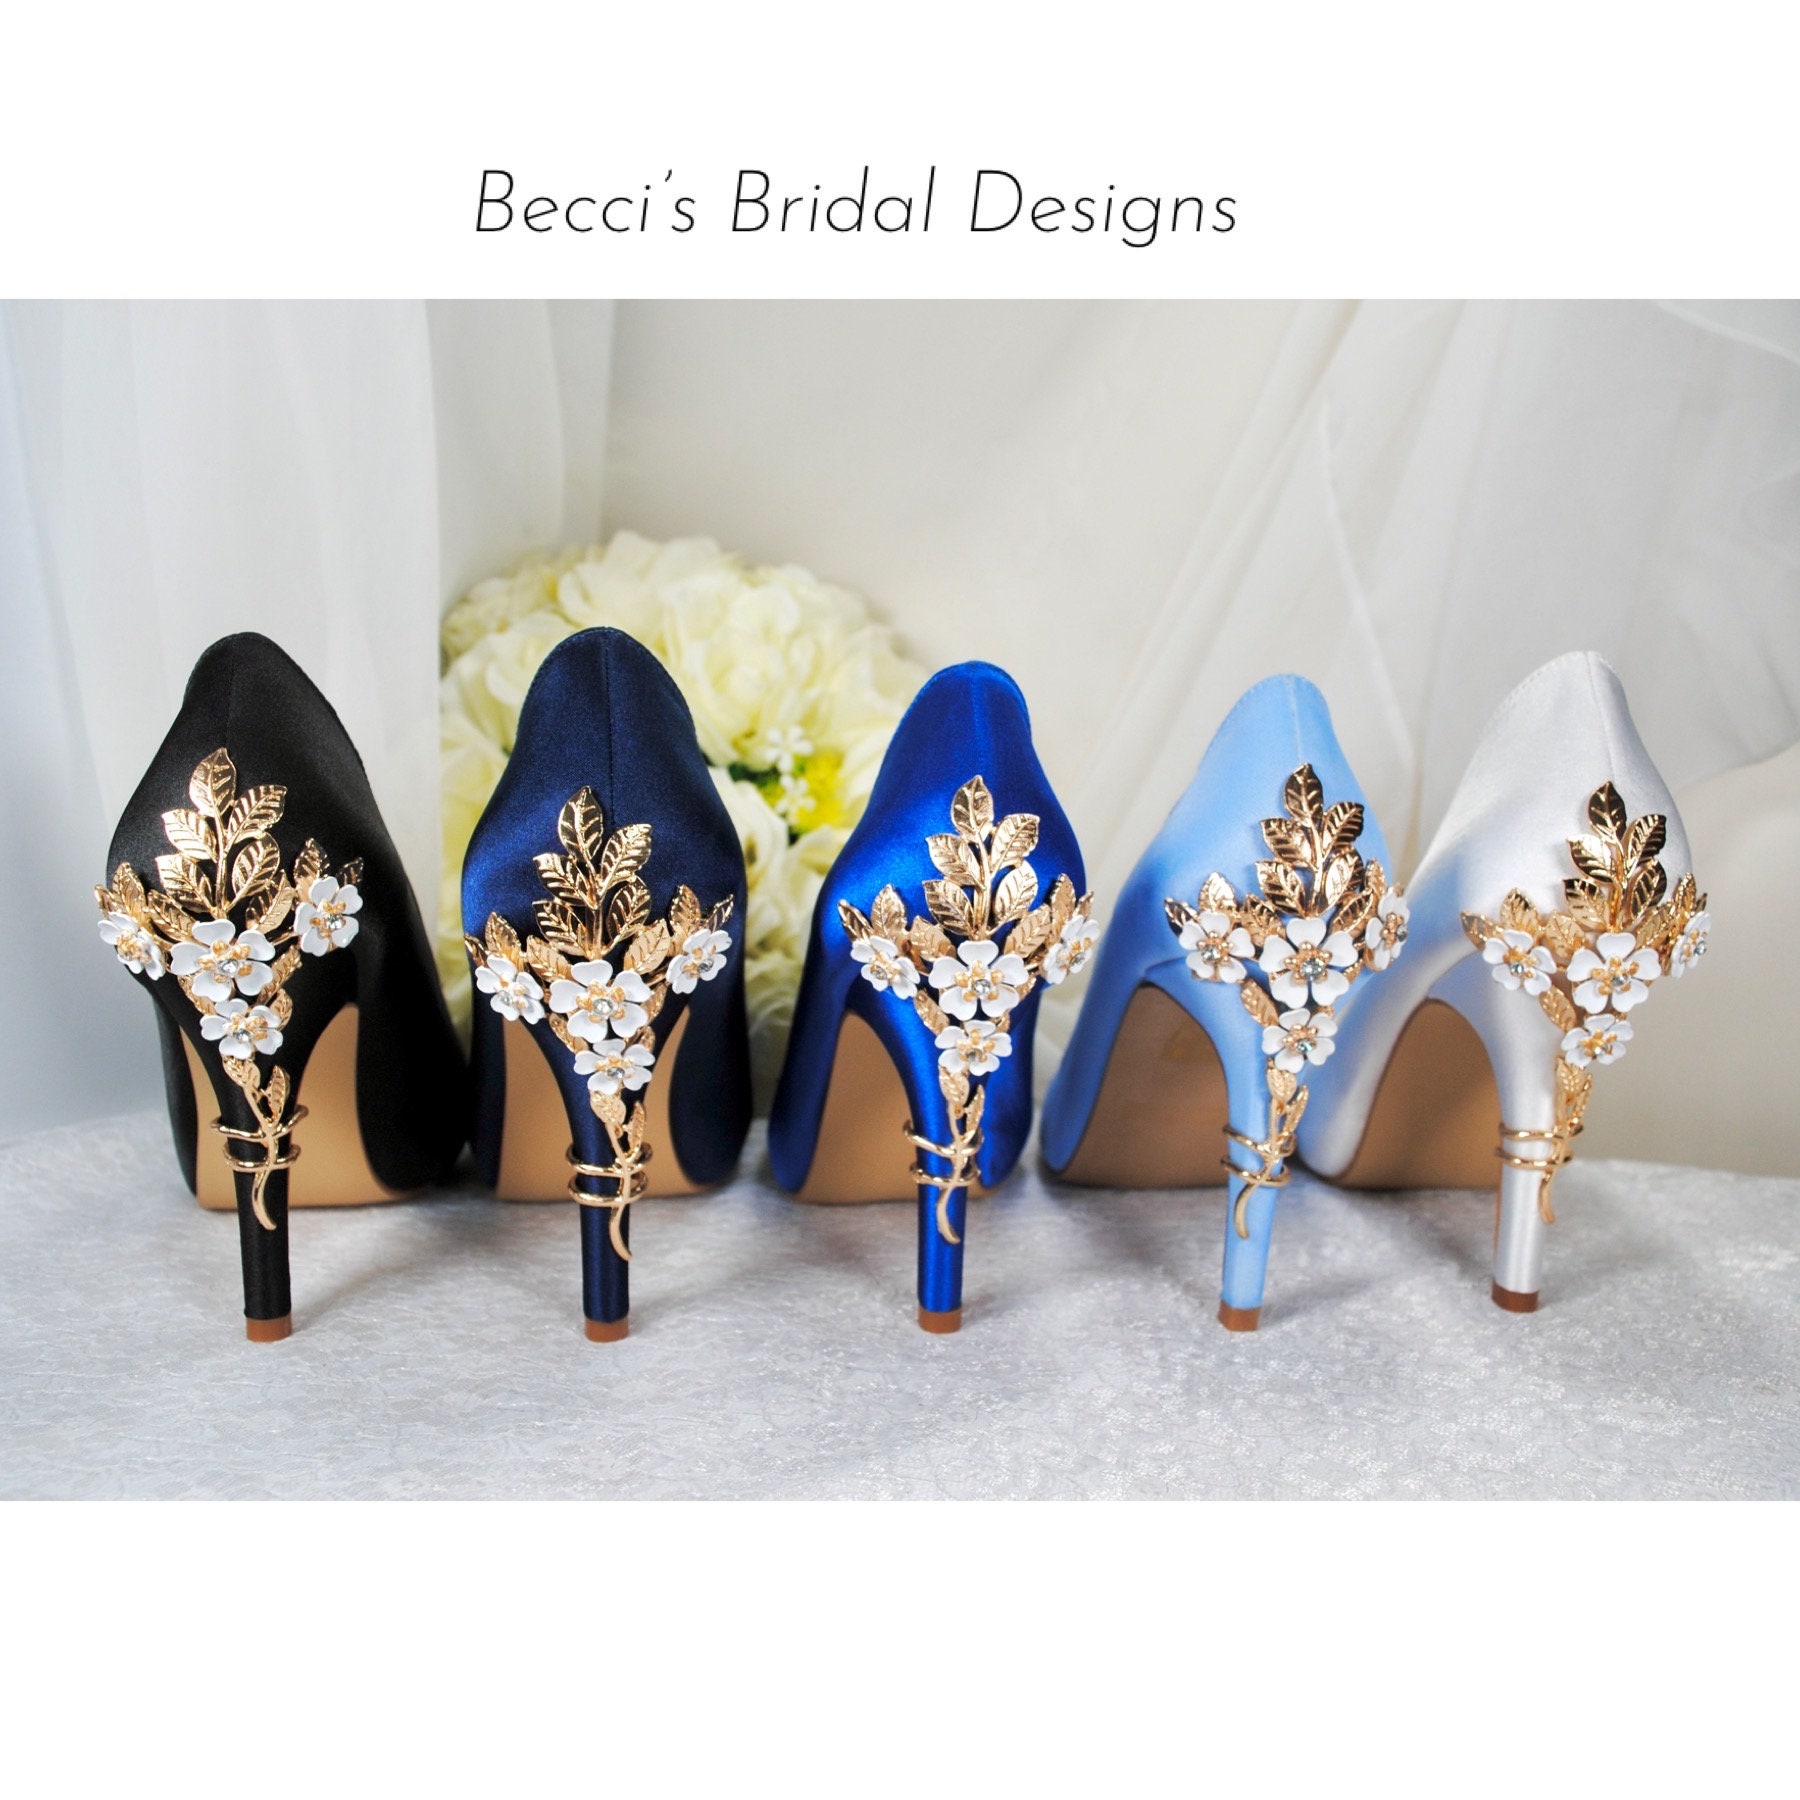 ruthie davis high heels Blue And Black Gold Spikes Size 39.5 | eBay